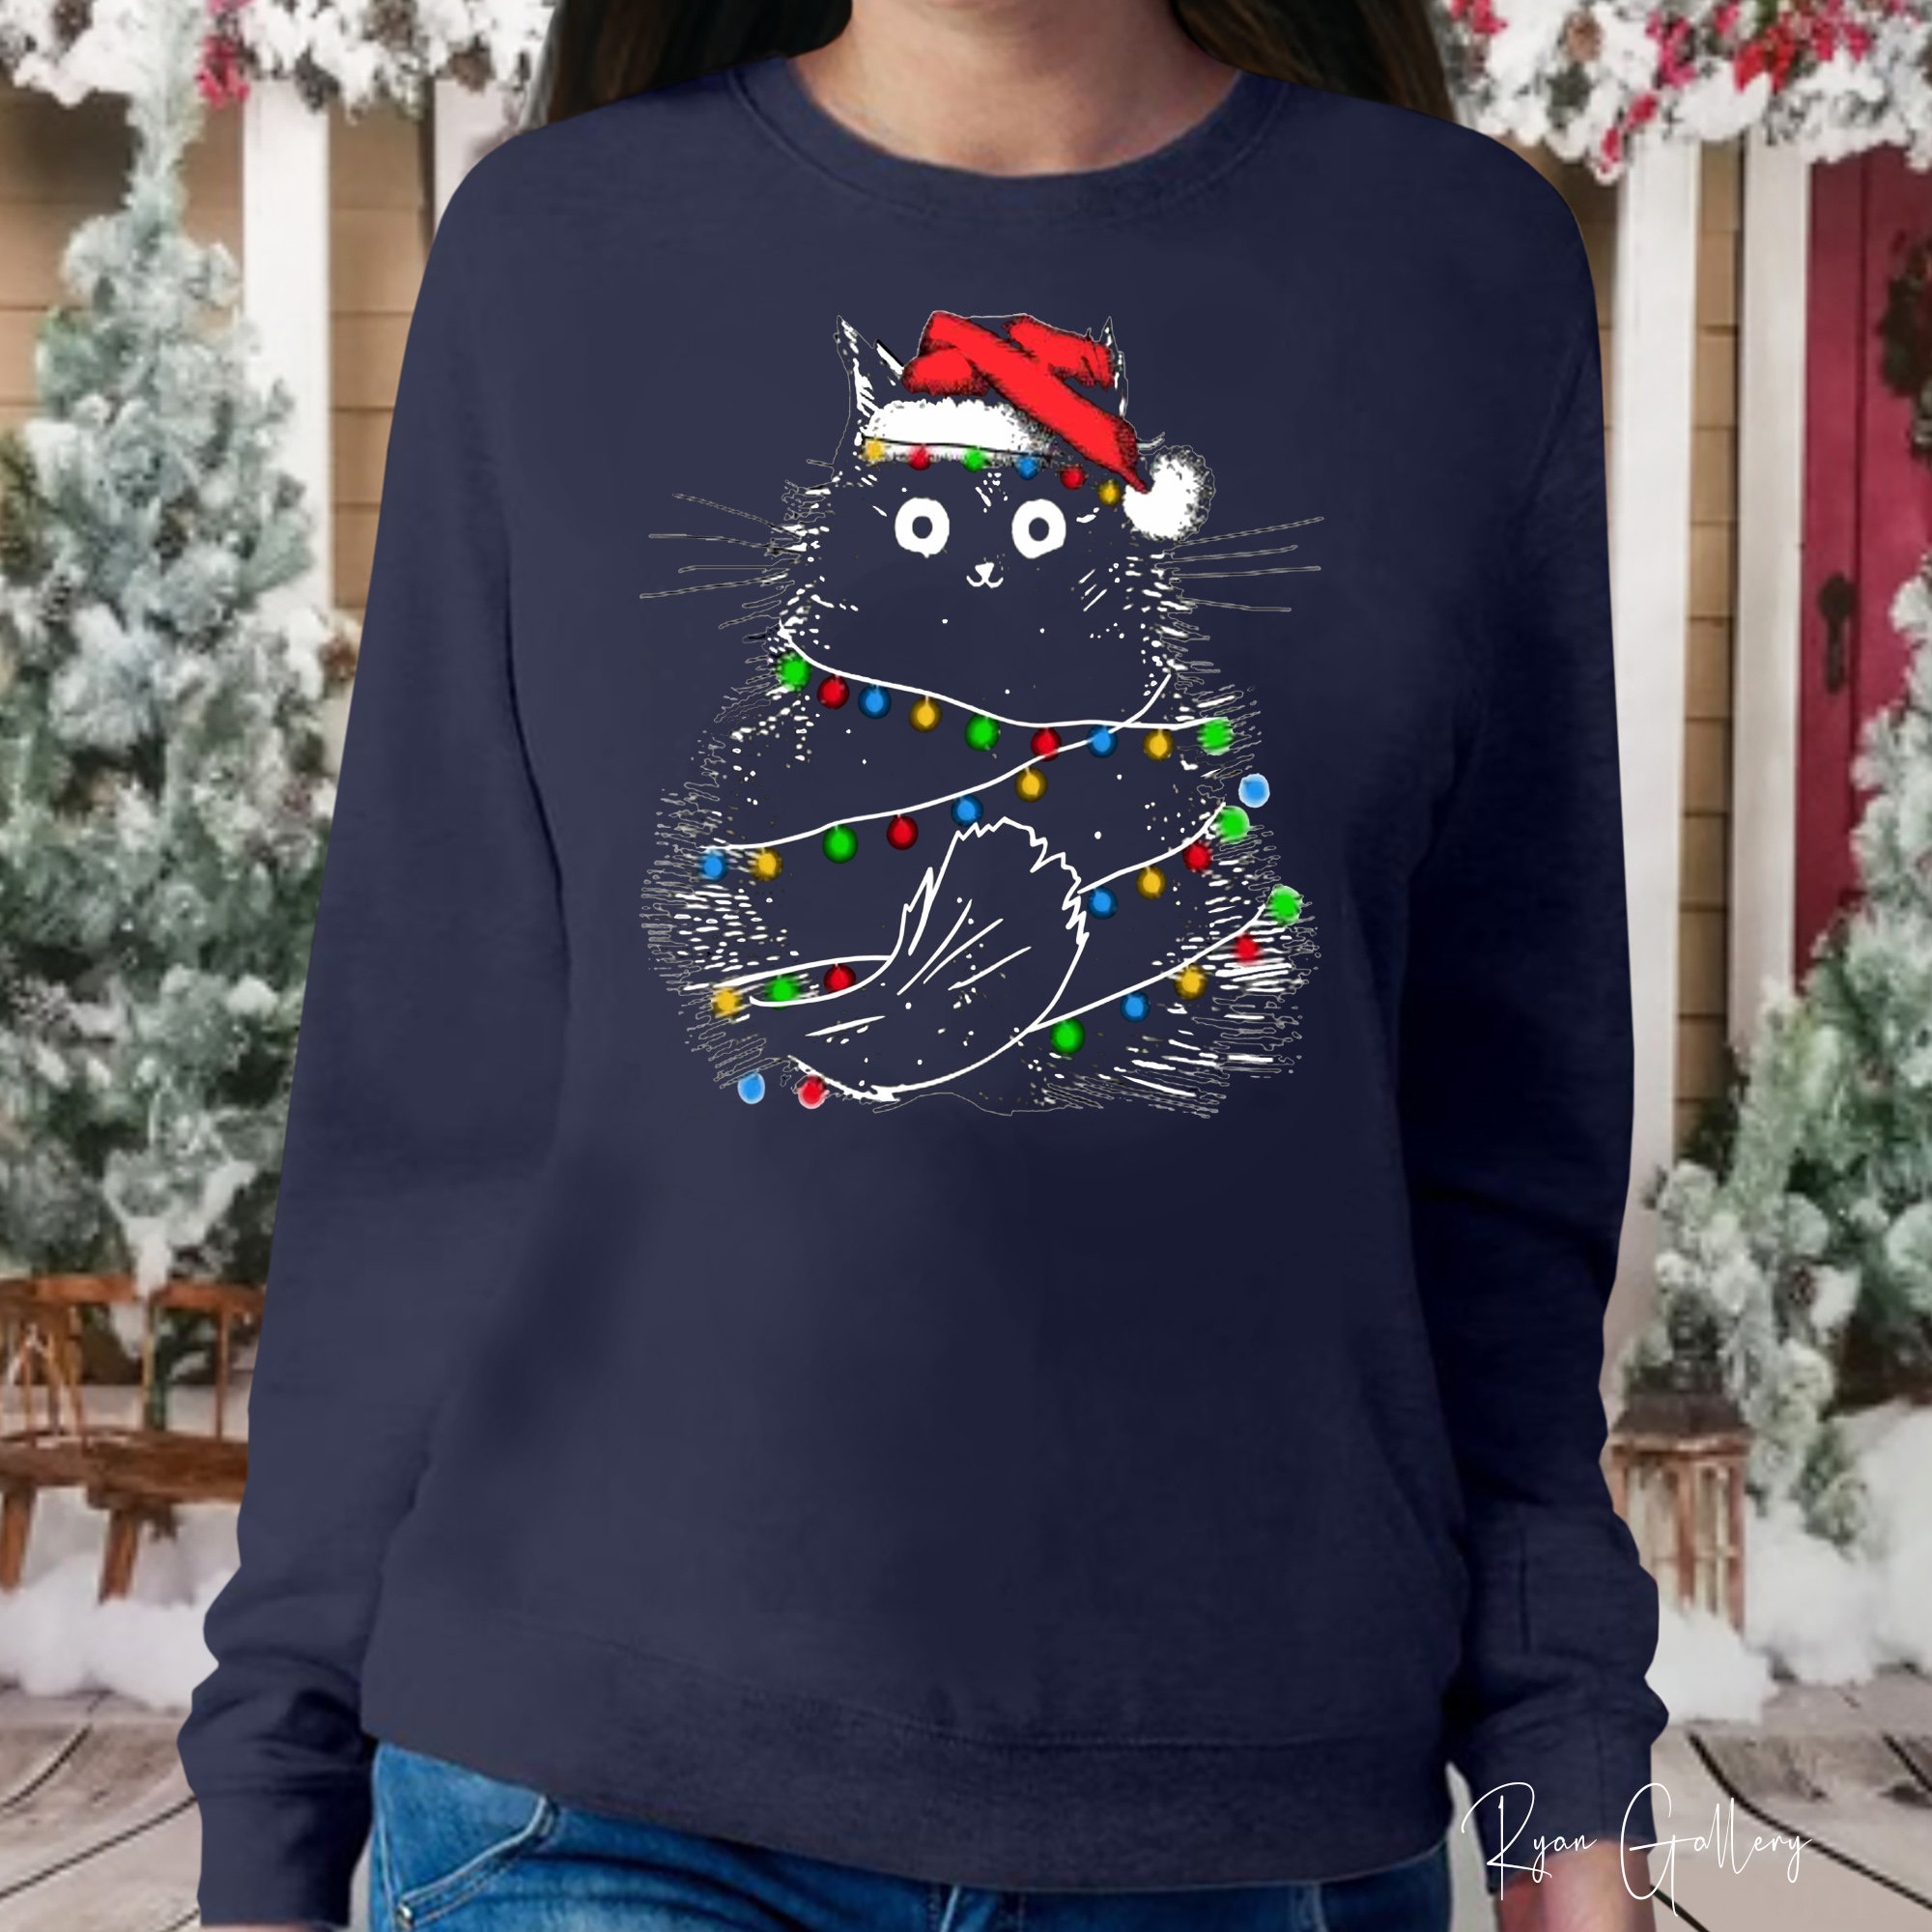 Christmas Fluffy With Fluffy Gifts Xmas - Etsy Cute Presents Cats Family Sweatshirt, Sweatshirt Lights Hat Christmas Christmas Cats Santa Jumper,